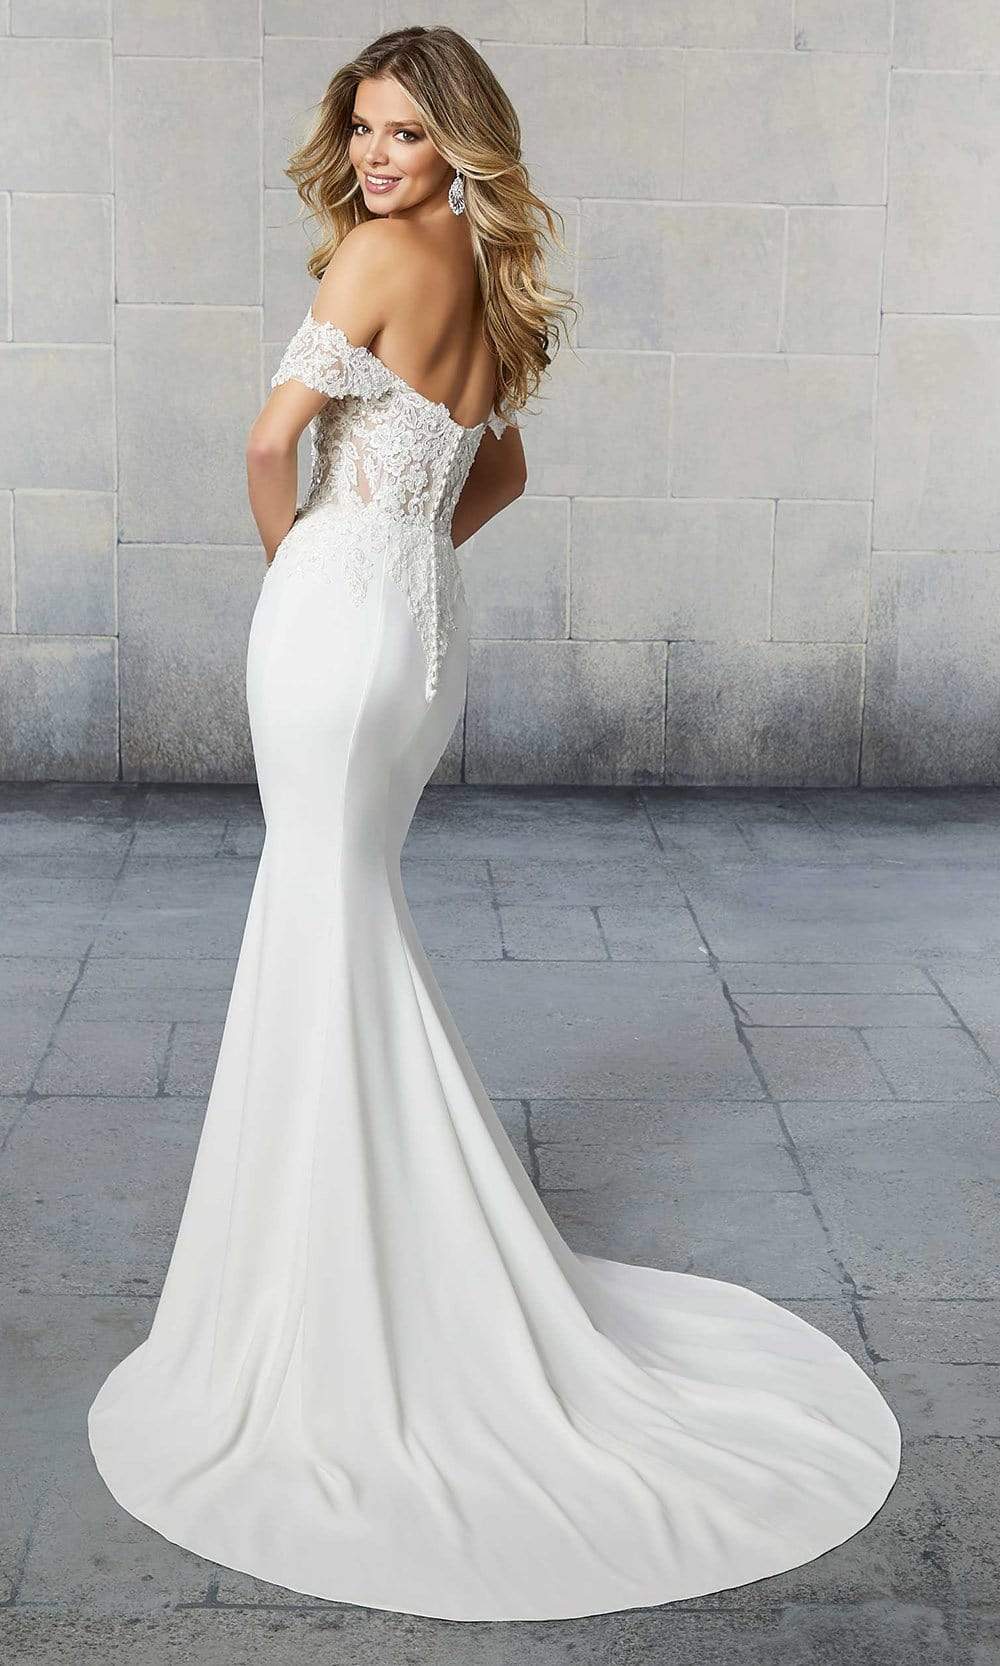 Mori Lee Bridal - 6922L Scout Applique Overskirt Wedding Gown Wedding Dresses